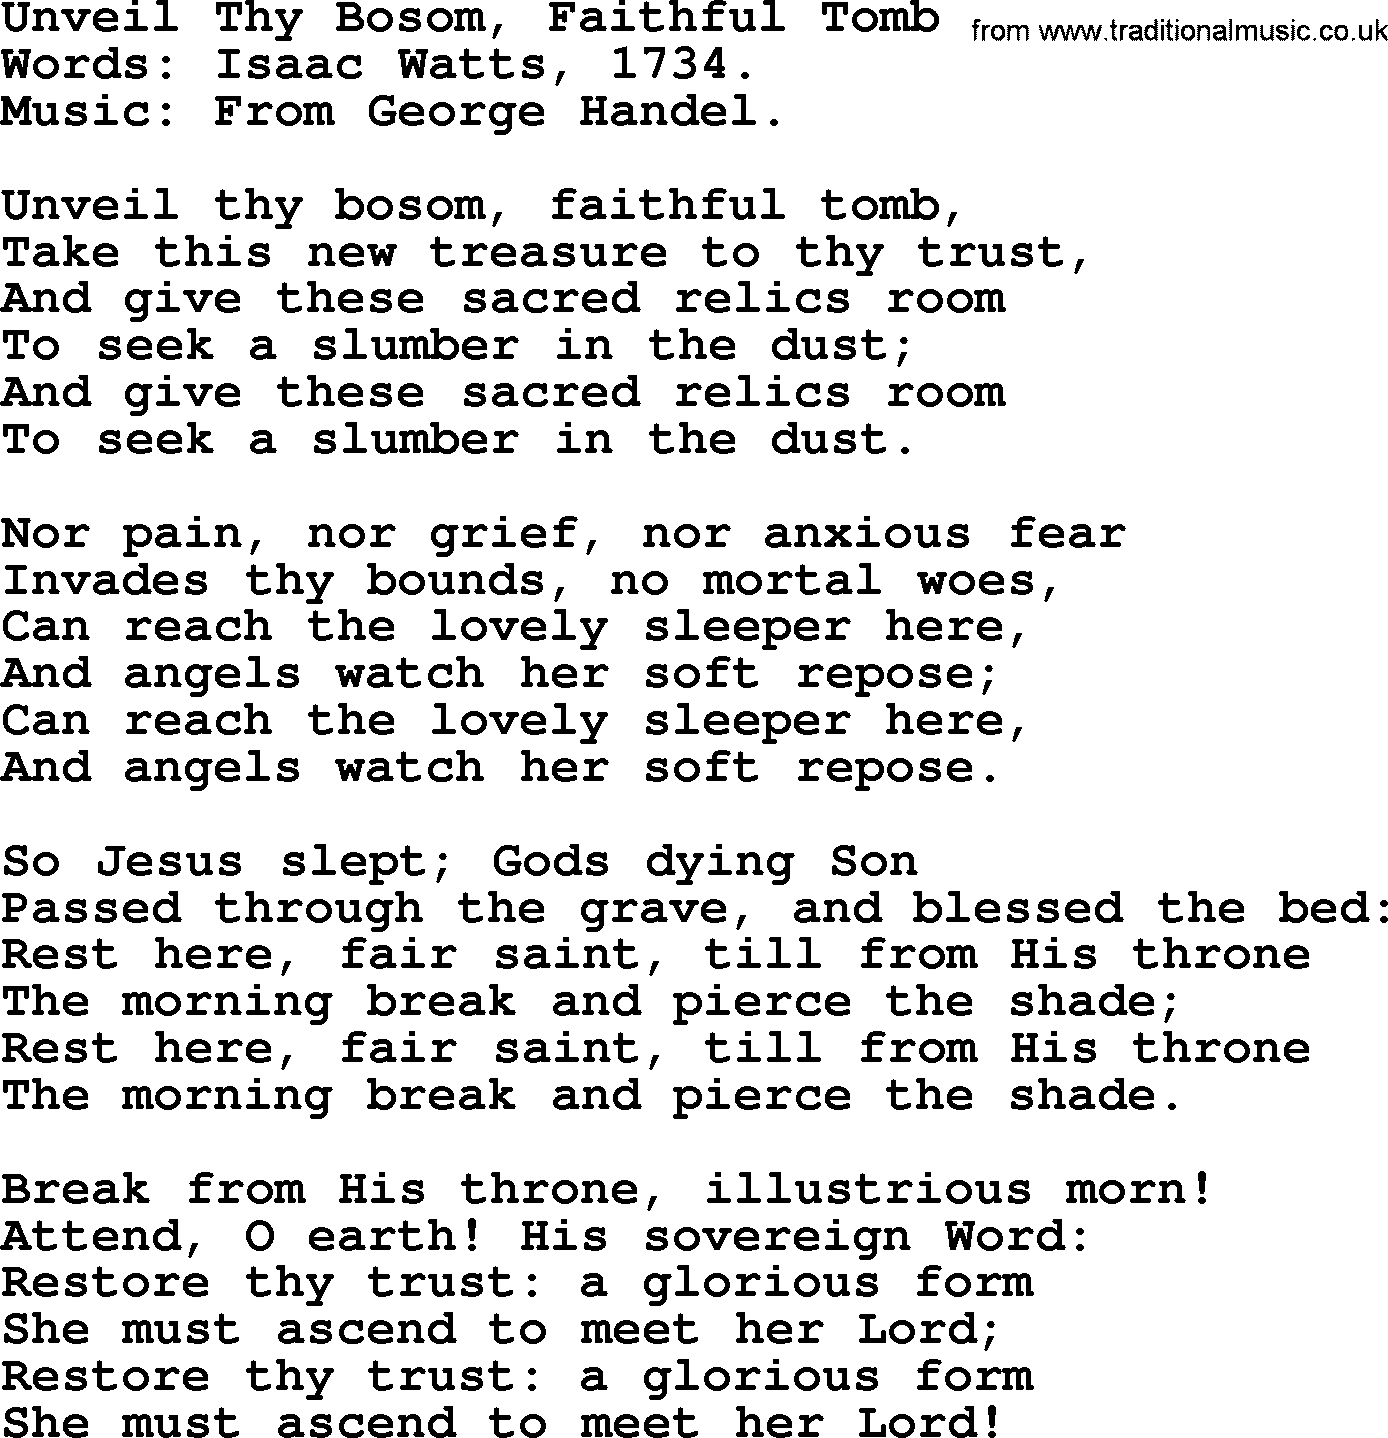 Isaac Watts Christian hymn: Unveil Thy Bosom, Faithful Tomb- lyricss